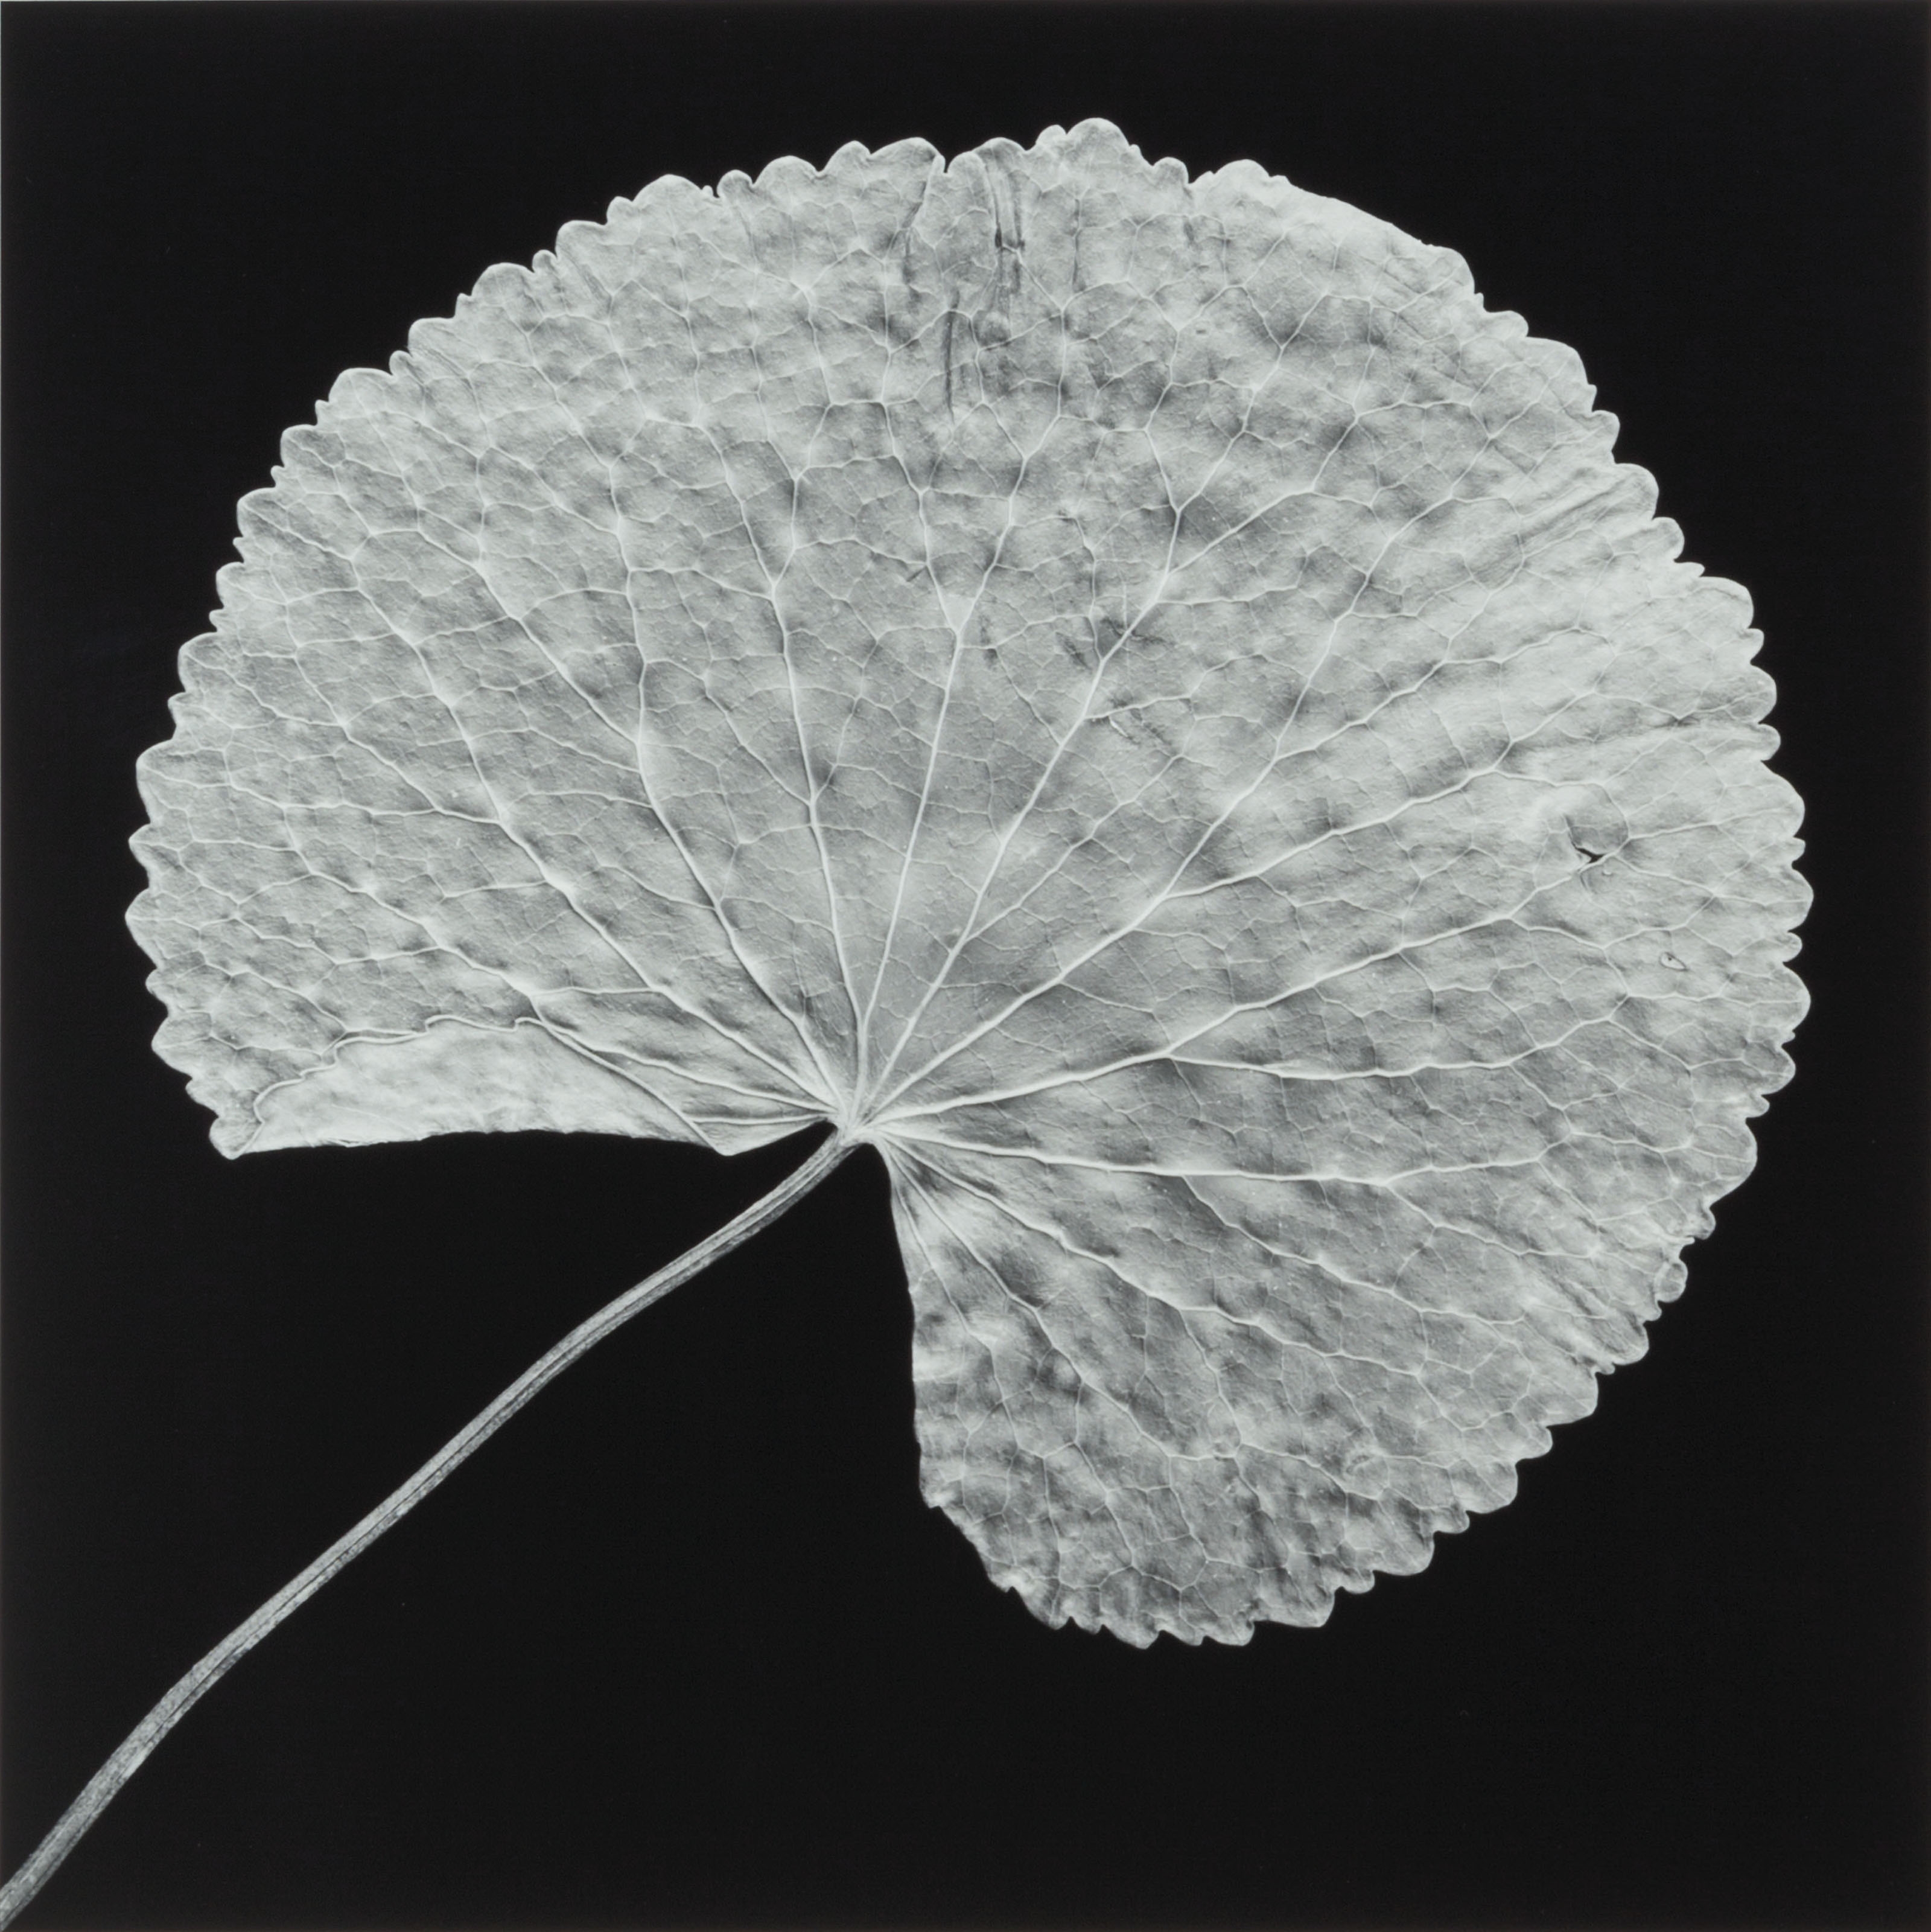 Leaf by Robert Mapplethorpe, 1989